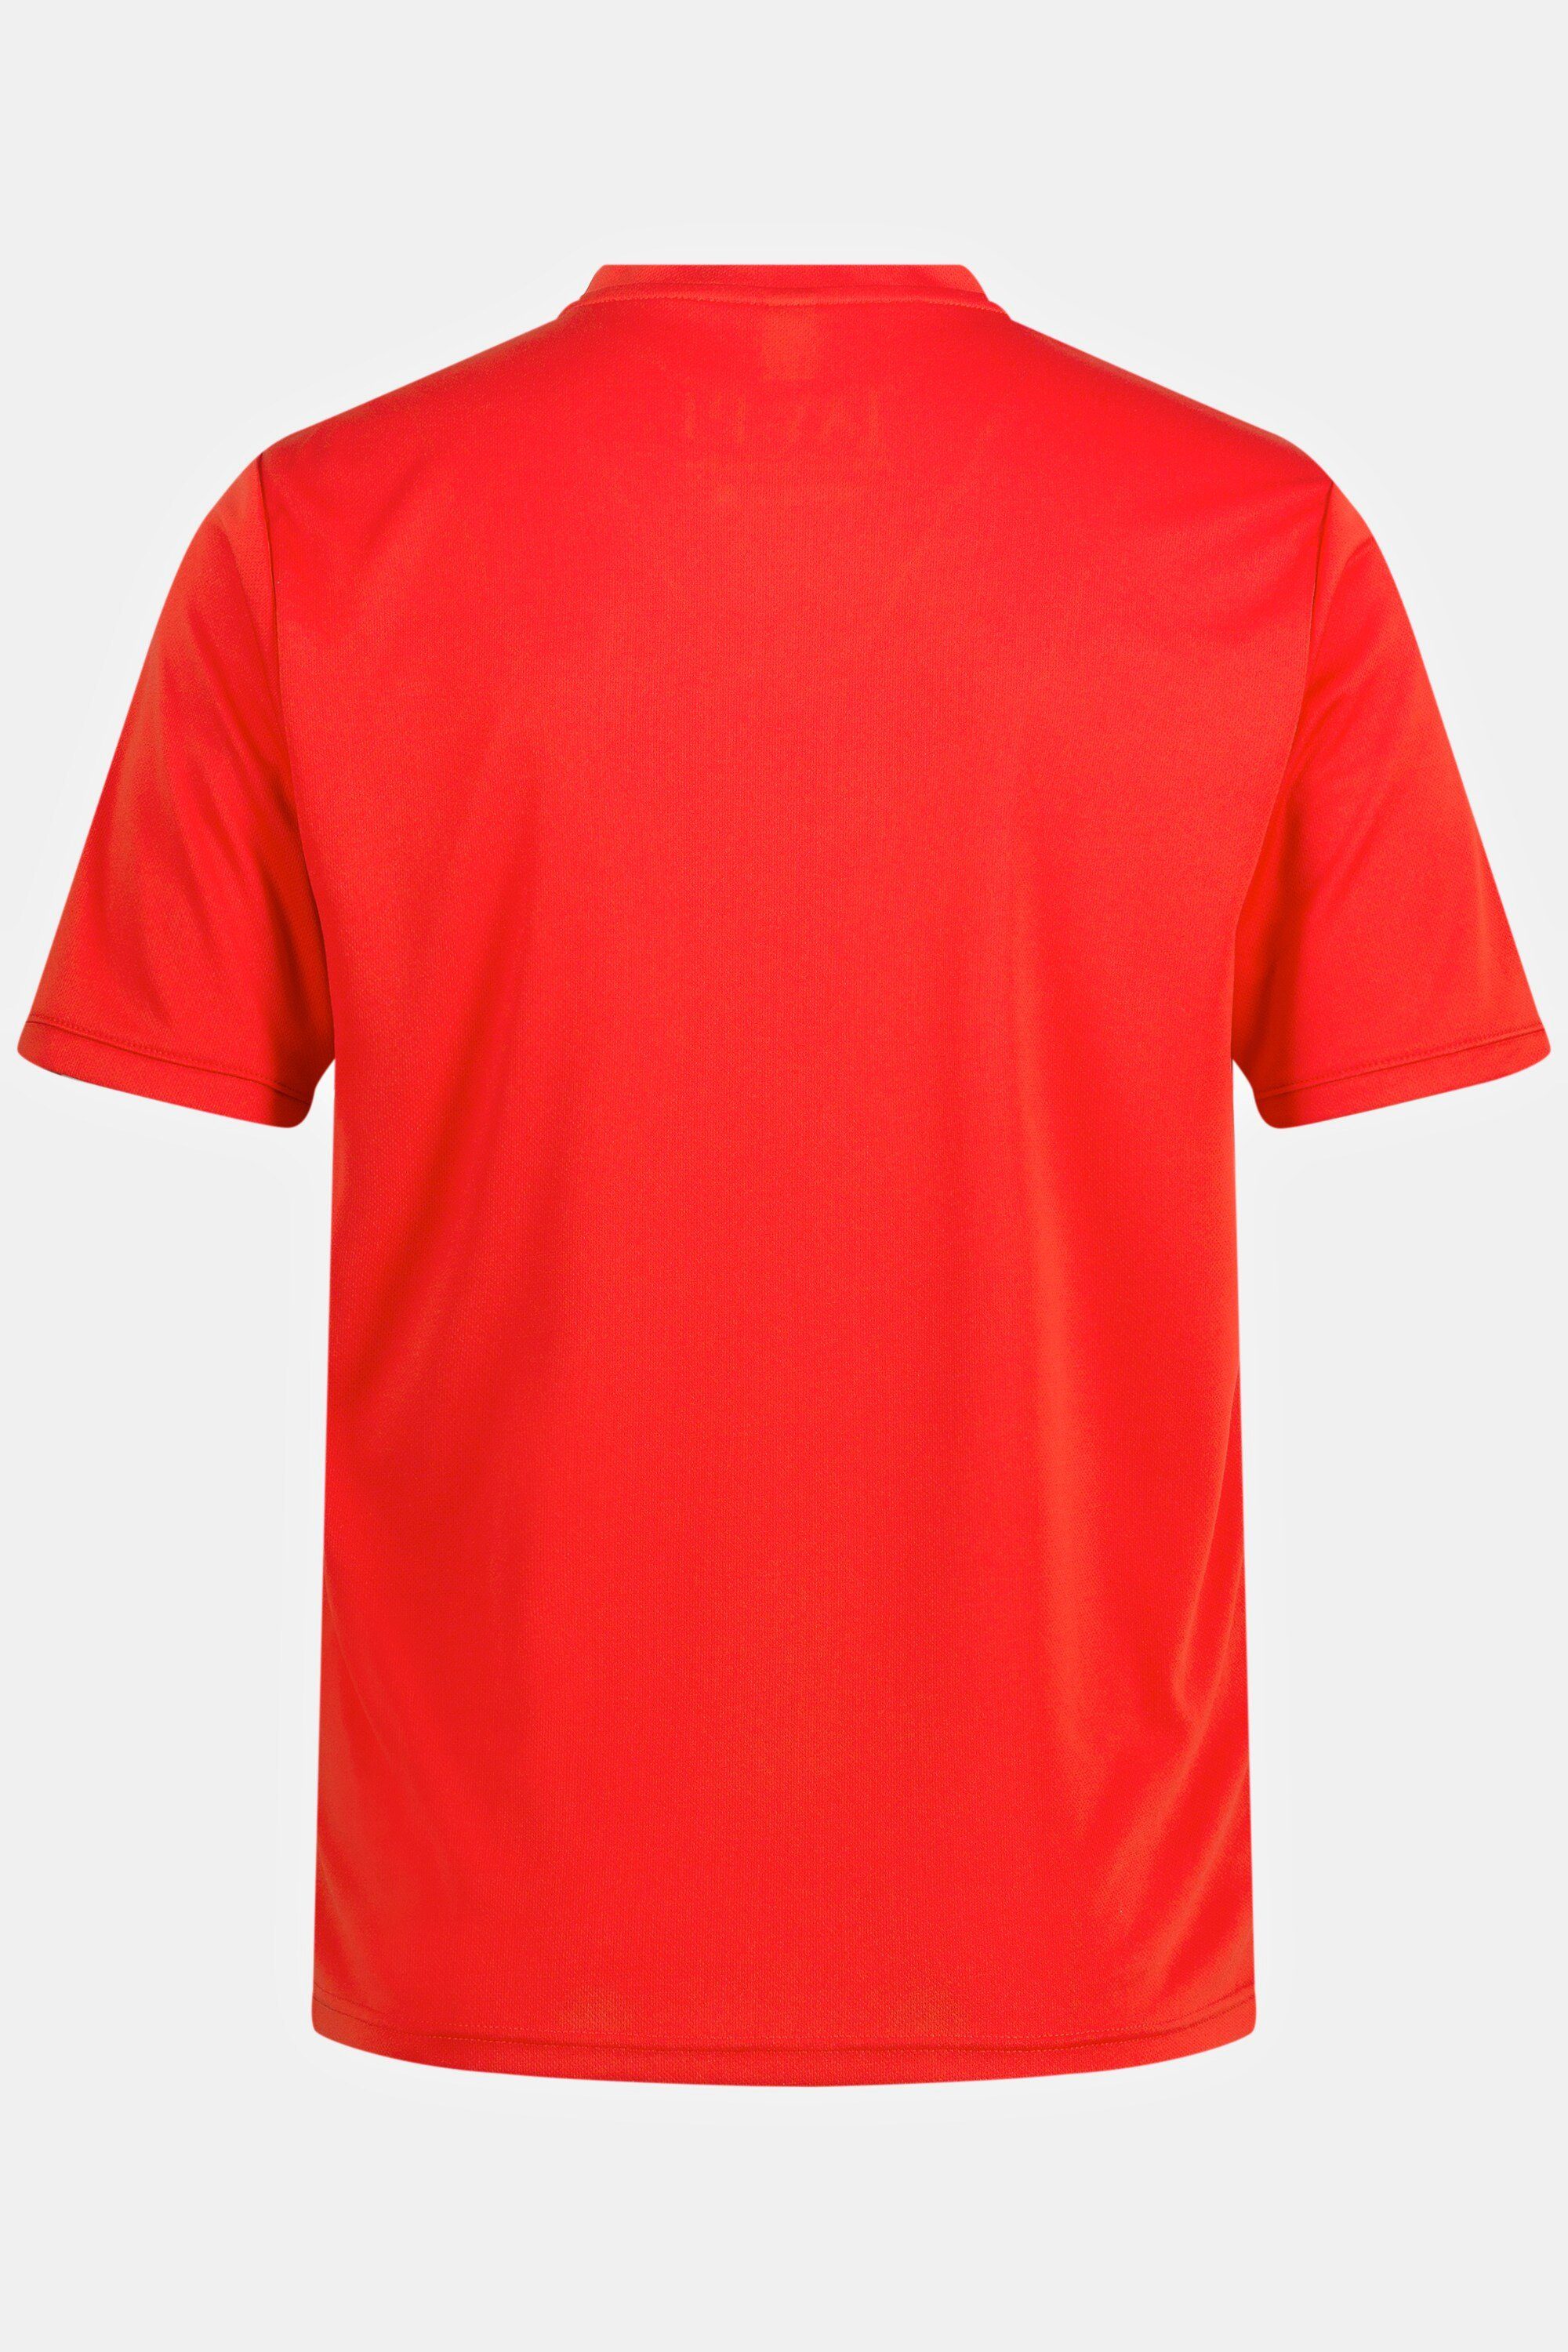 JP1880 hellrot Halbarm QuickDry Funktions-Henley T-Shirt